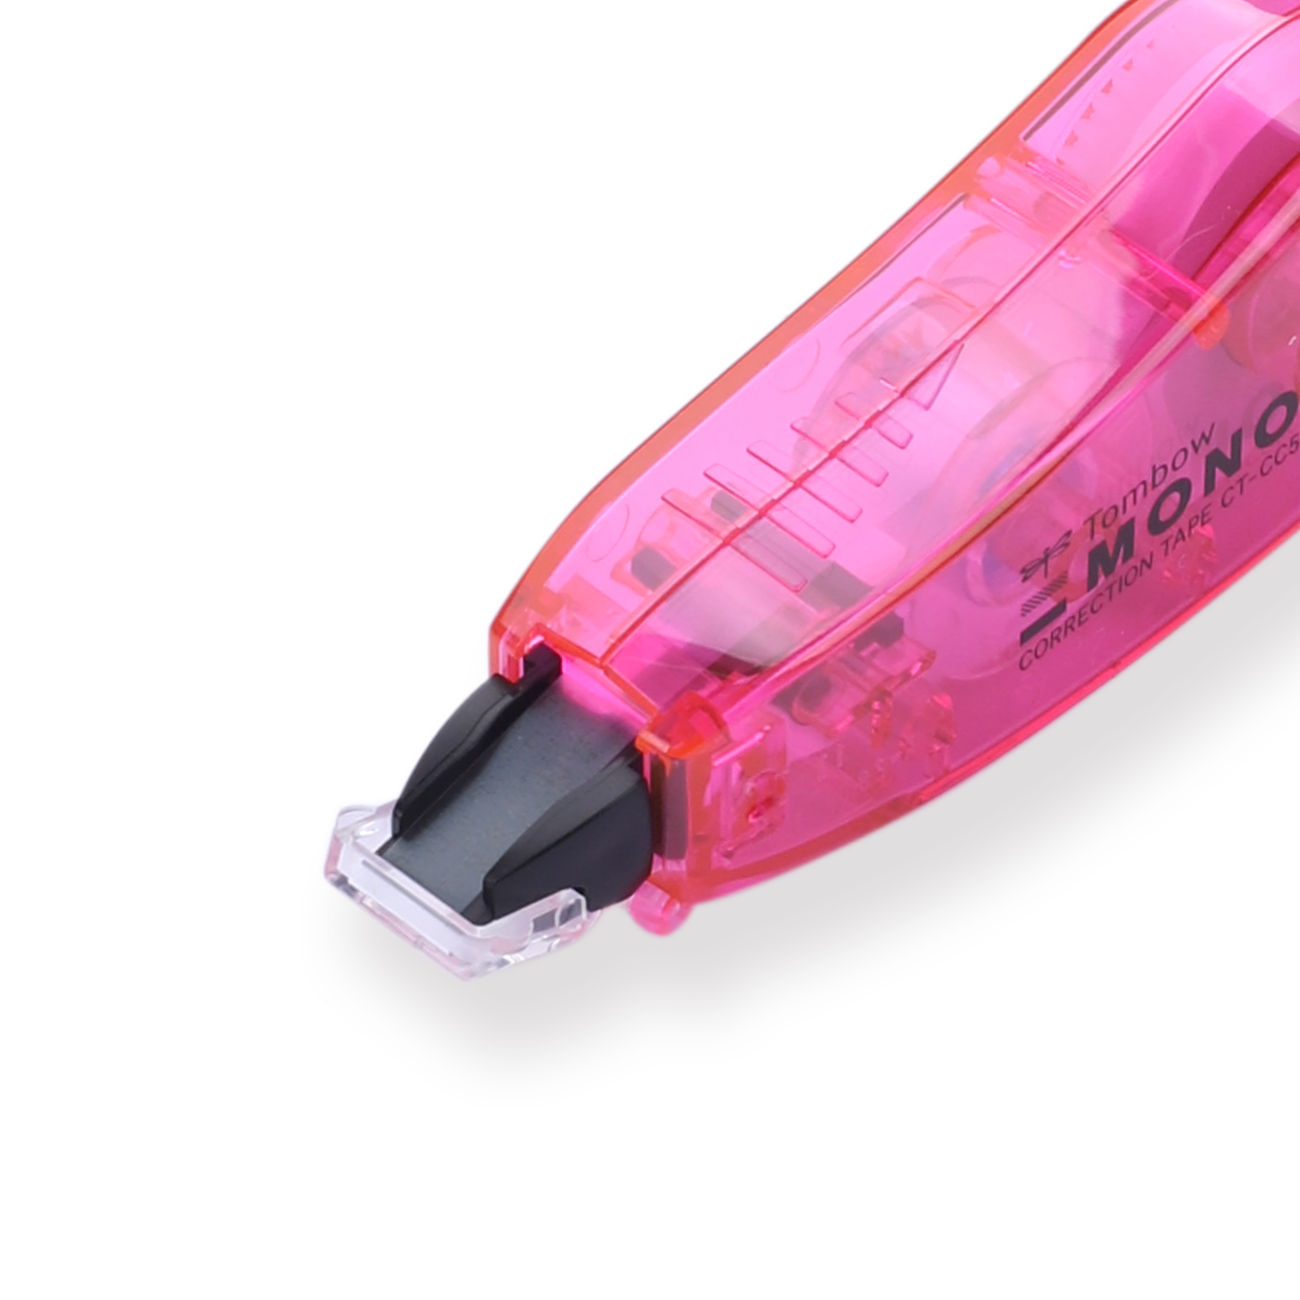 Tombow Mono CC5C Correction Tape 5mm Pink